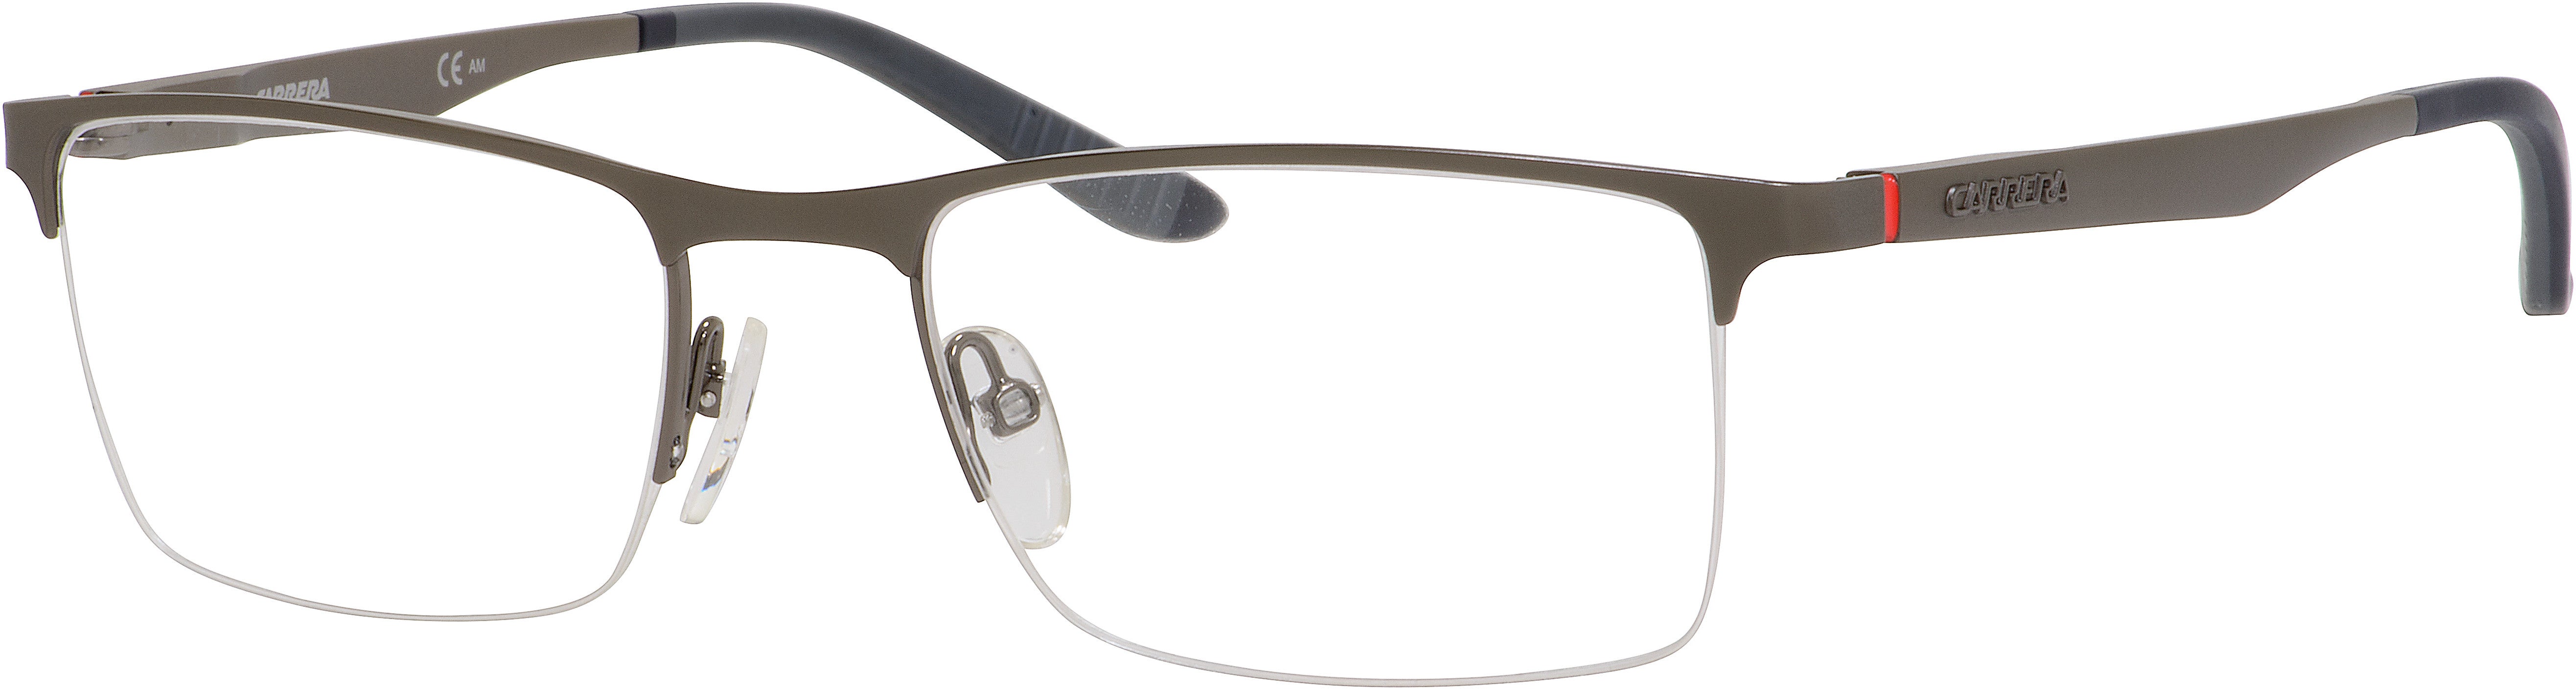  Carrera 8810 Rectangular Eyeglasses 0A25-0A25  Matte Dark Ruthenium (00 Demo Lens)